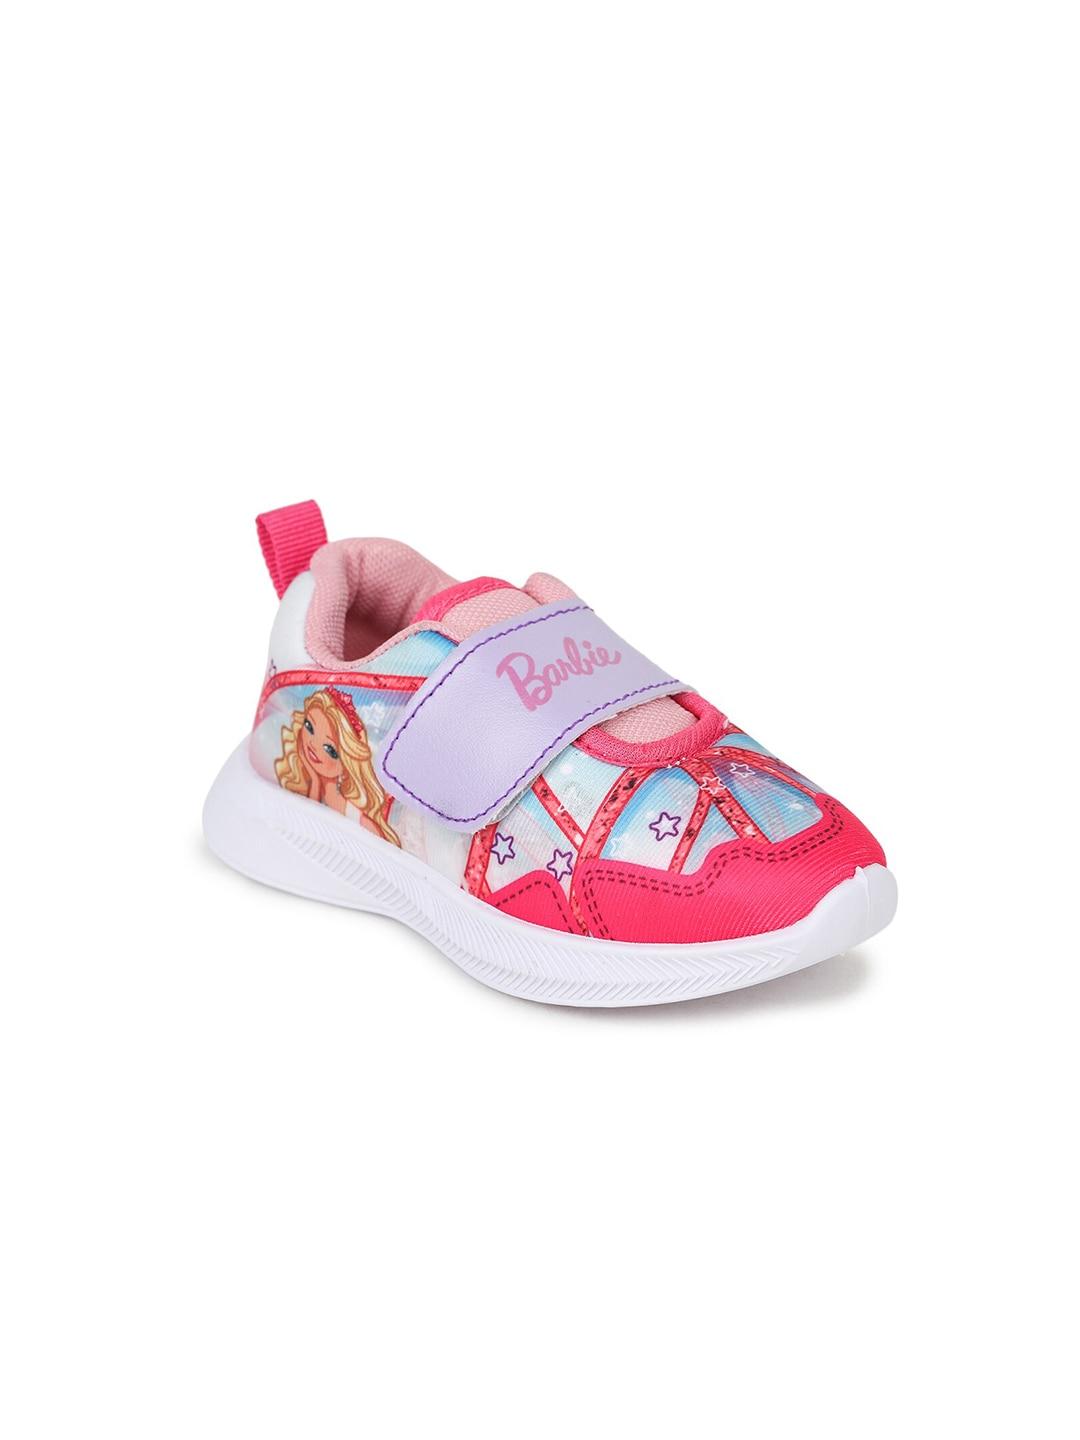 toothless-girls-pink-walking-shoes